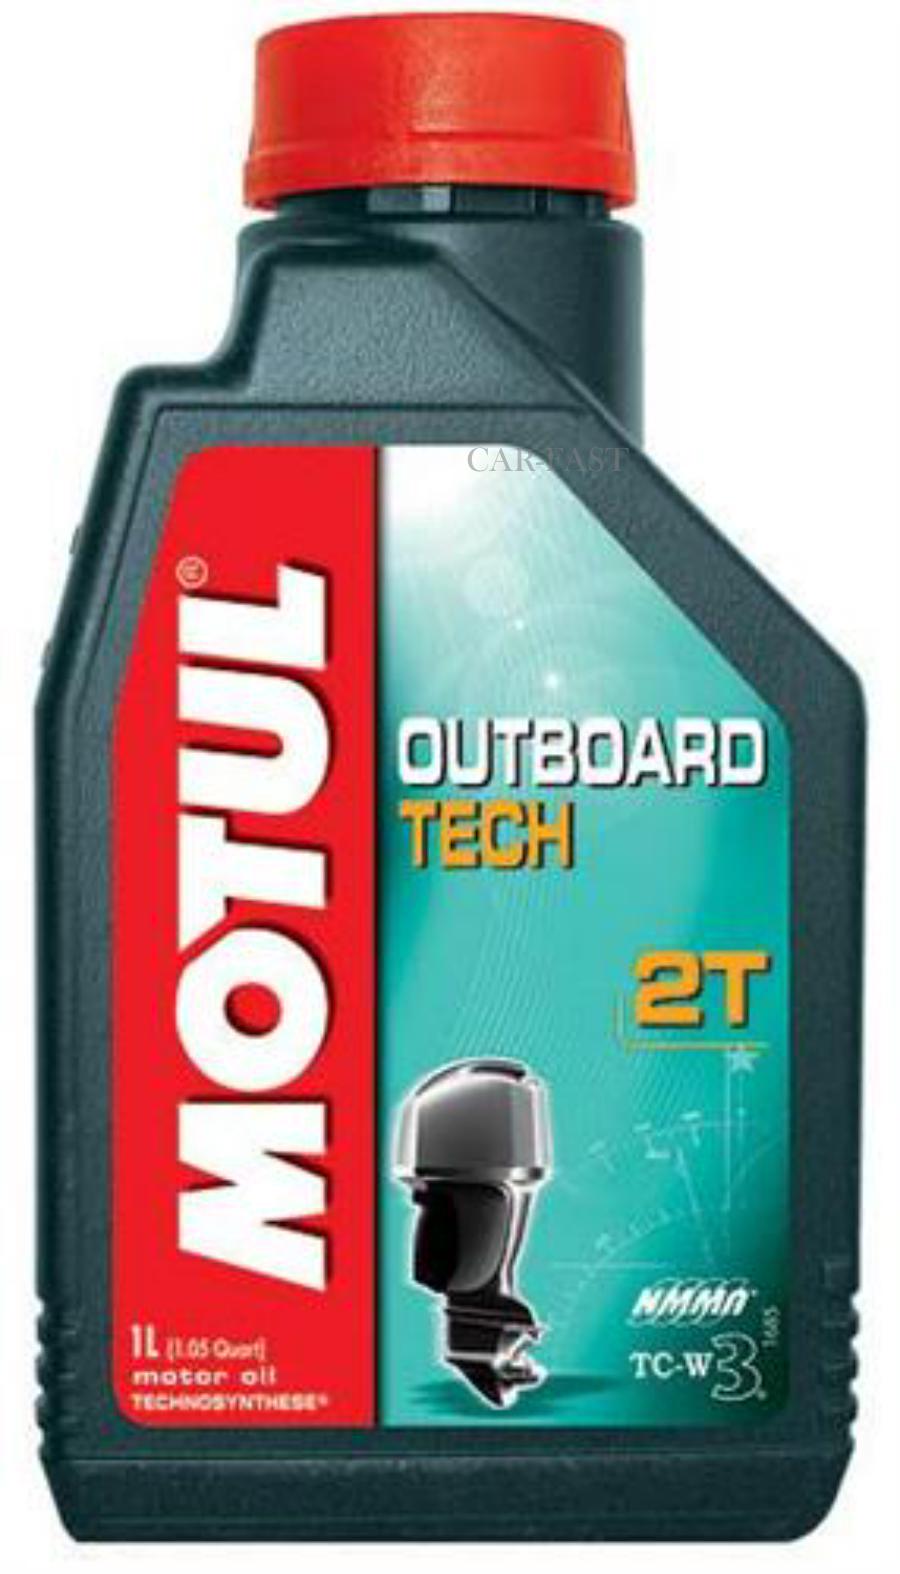 Motul outboard Tech 2t 1 л. Масло Motul outboard Tech 2t. Motul outboard 2t 1л. Масло 2-х тактное Motul outboard 2t. Масло для лодочный мотор 2т мотюль